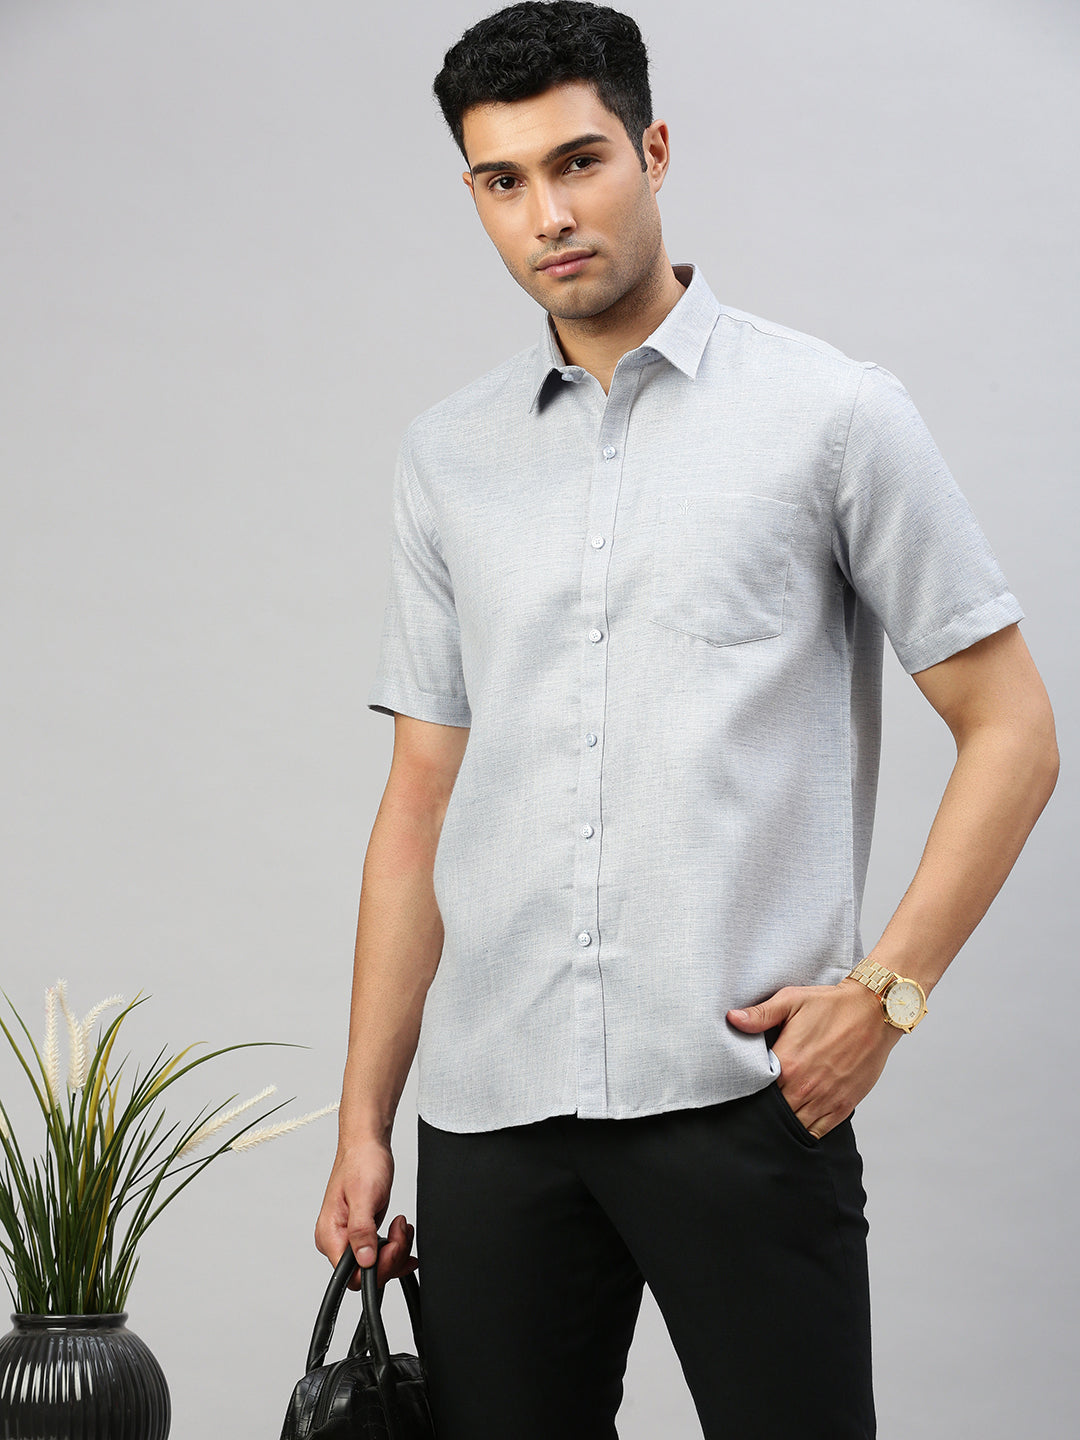 Mens Formal Shirt Grey T7 (CG12)